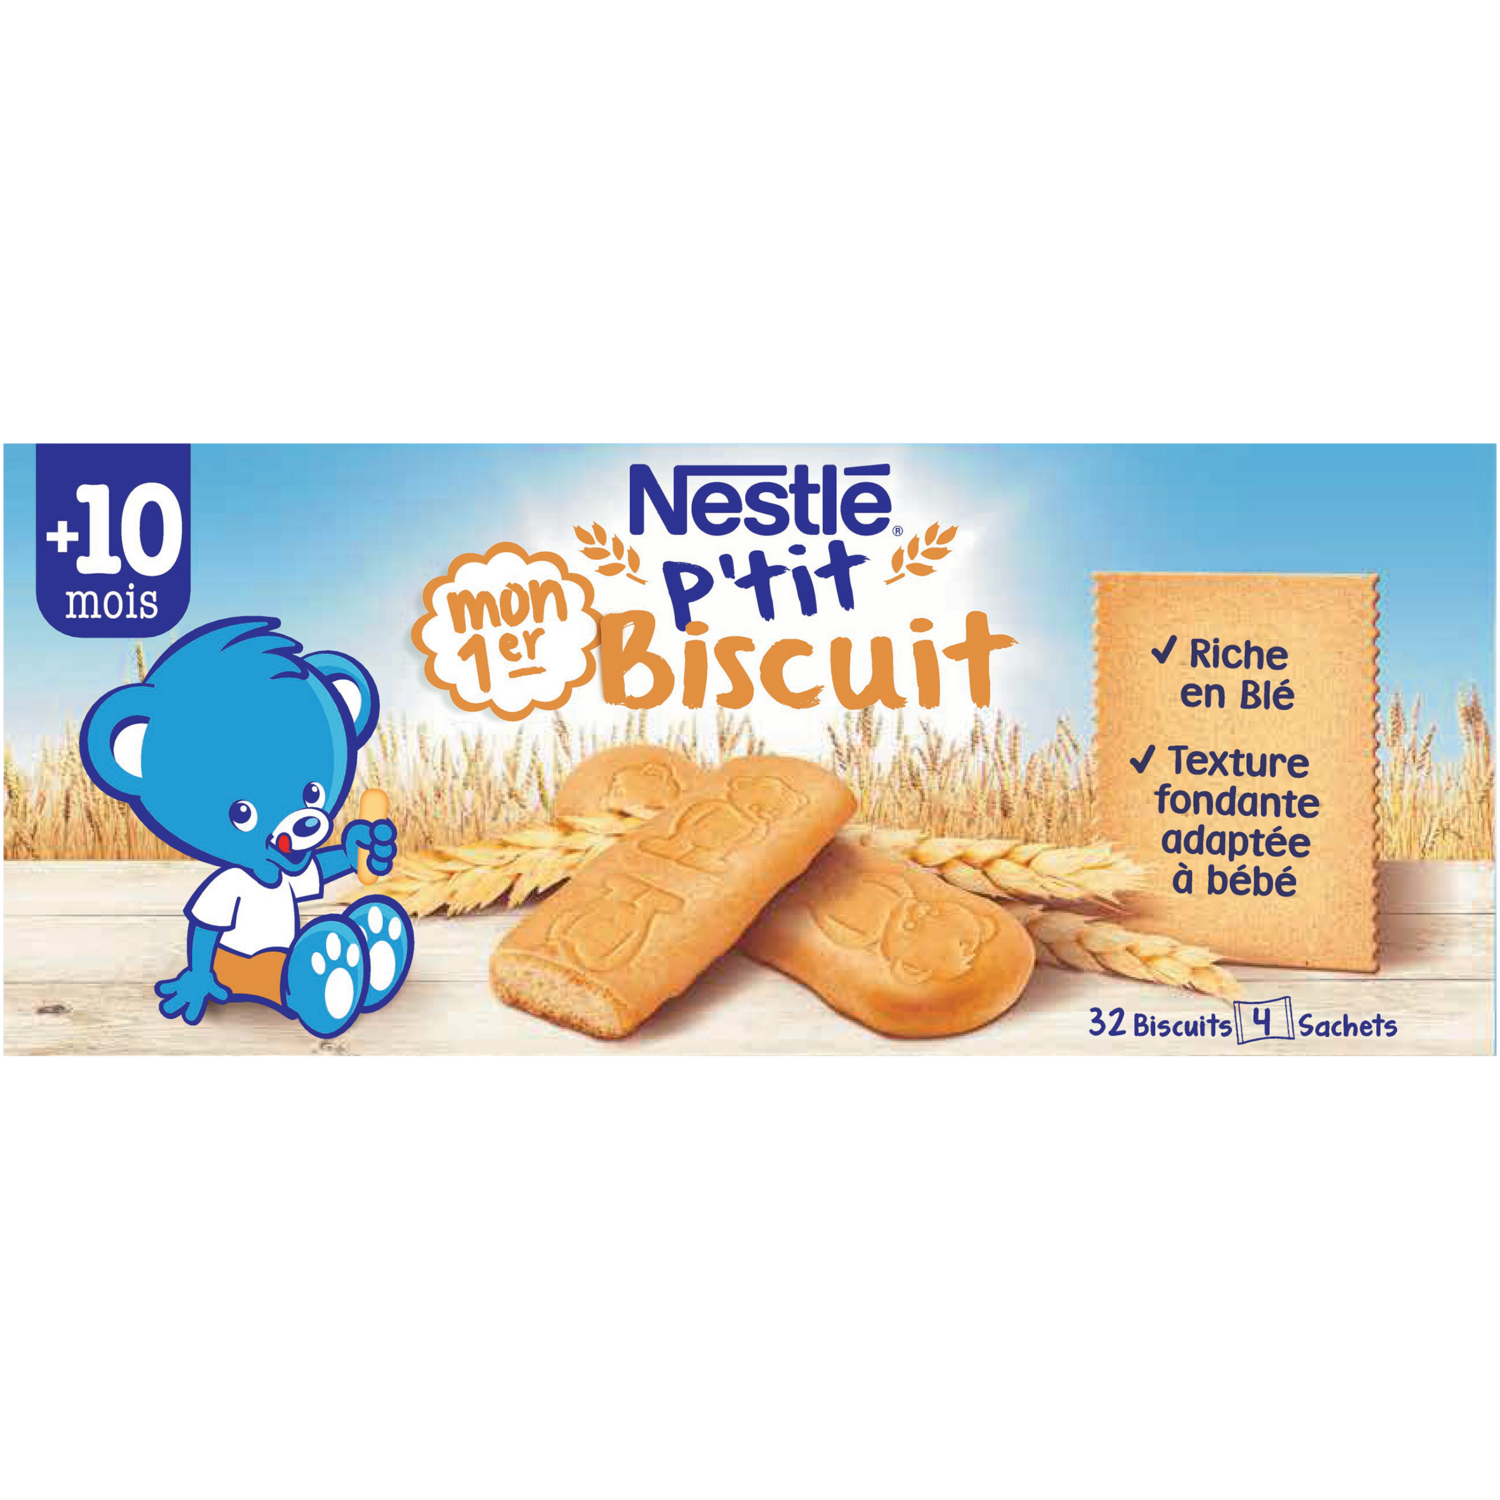 P'tit Biscuit de Nestle : avis et tests - Dessert et goûter - P